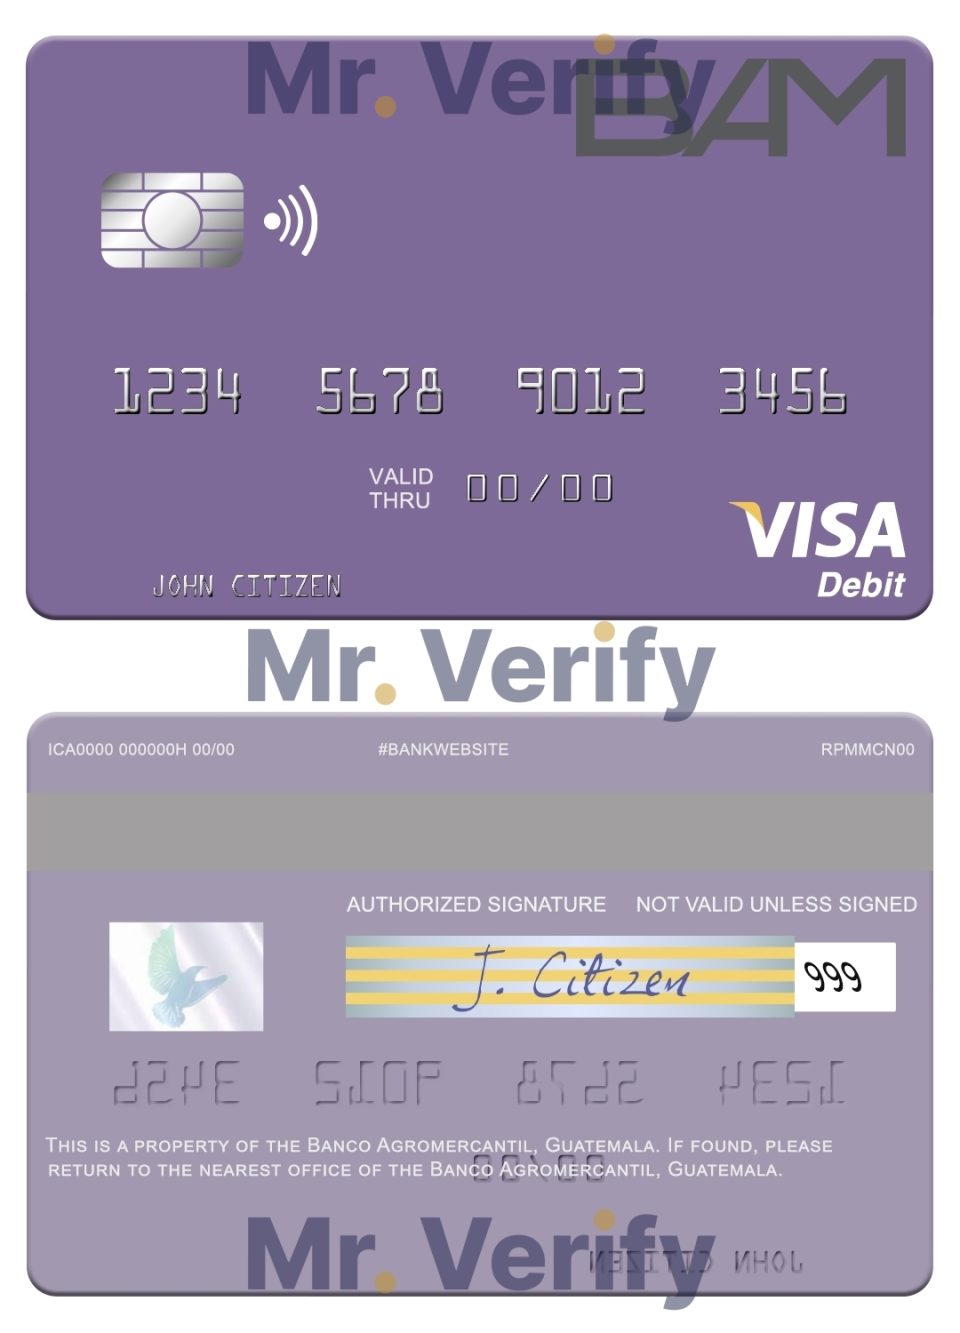 Fillable Guatemala Banco Agromercantil visa card Templates | Layer-Based PSD